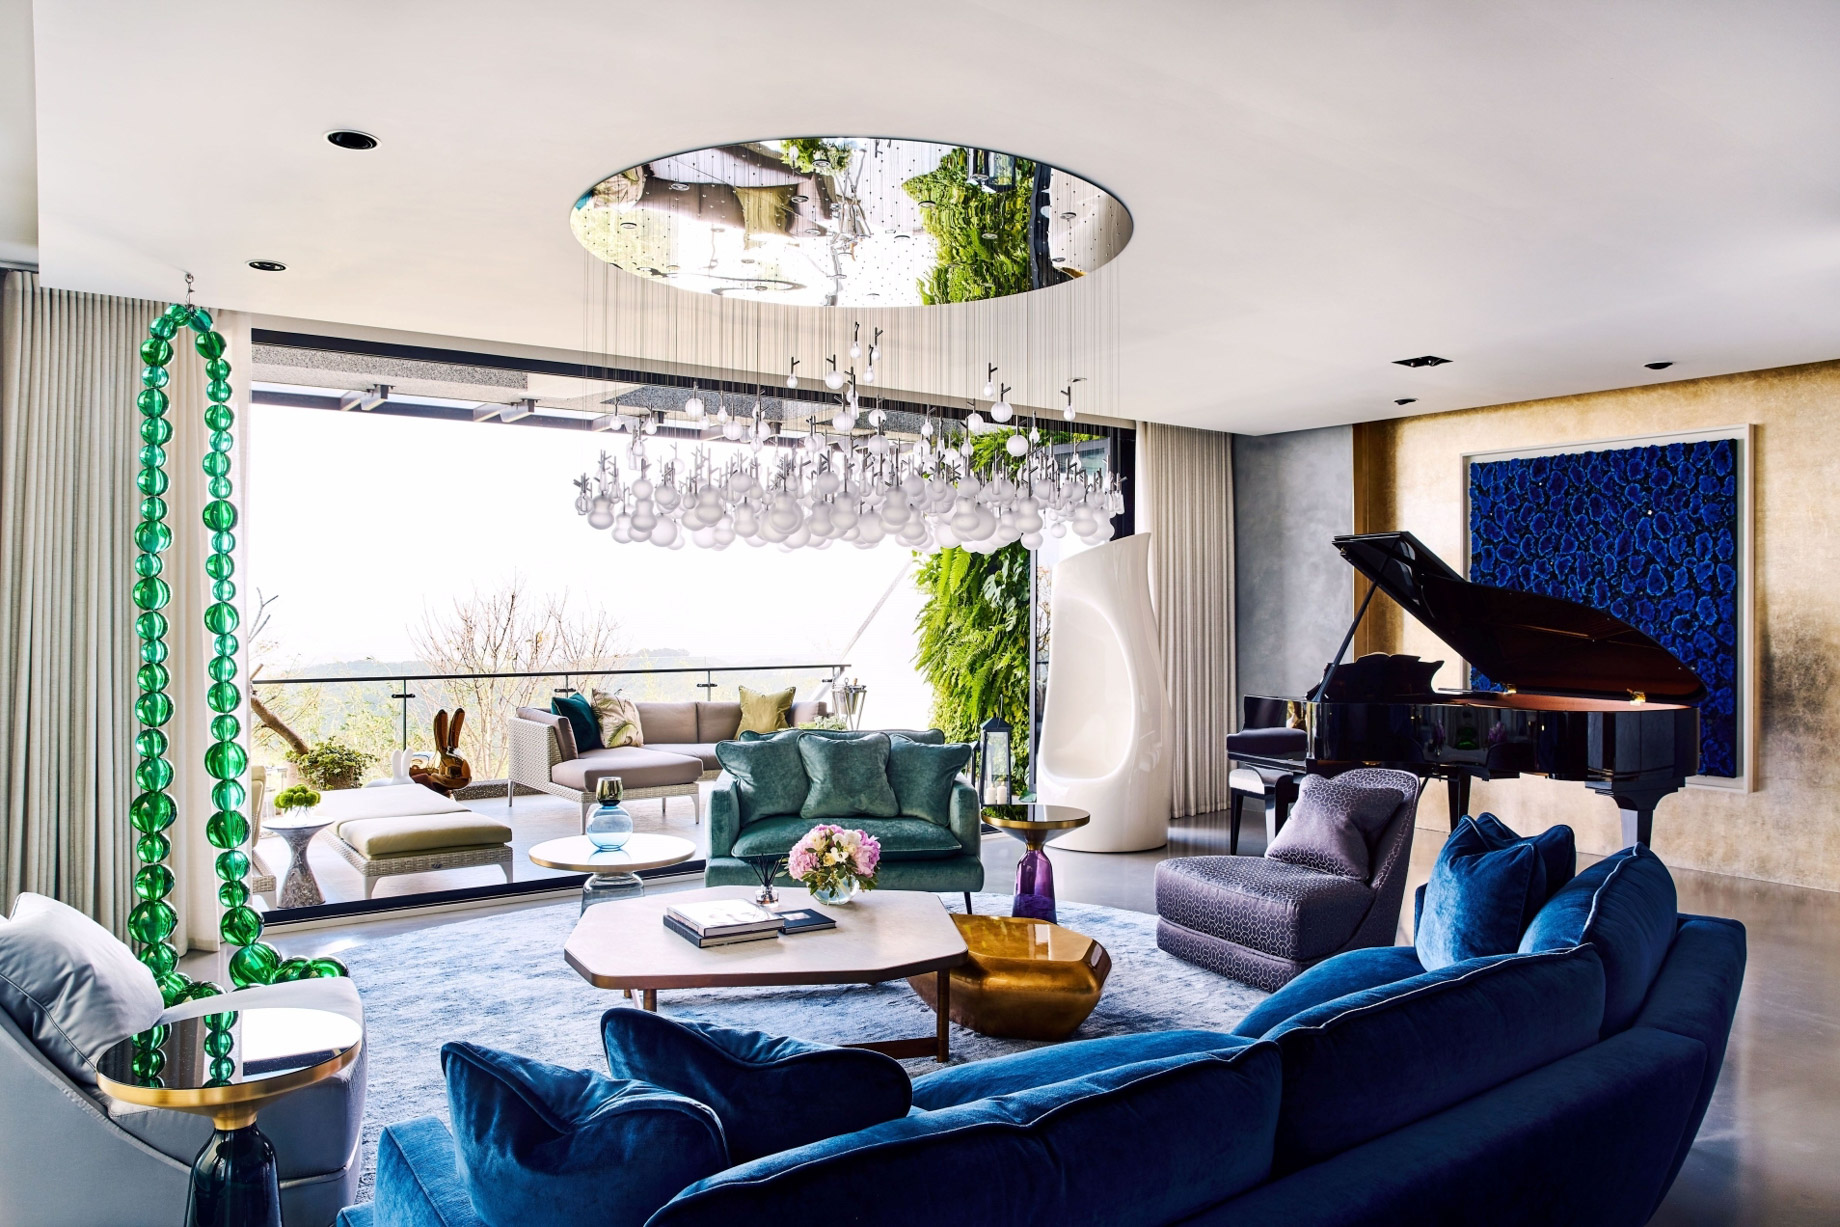 Pearl Neckless Luxury Apartment Interior Design Taipei, Taiwan – L’atelier Fantasia